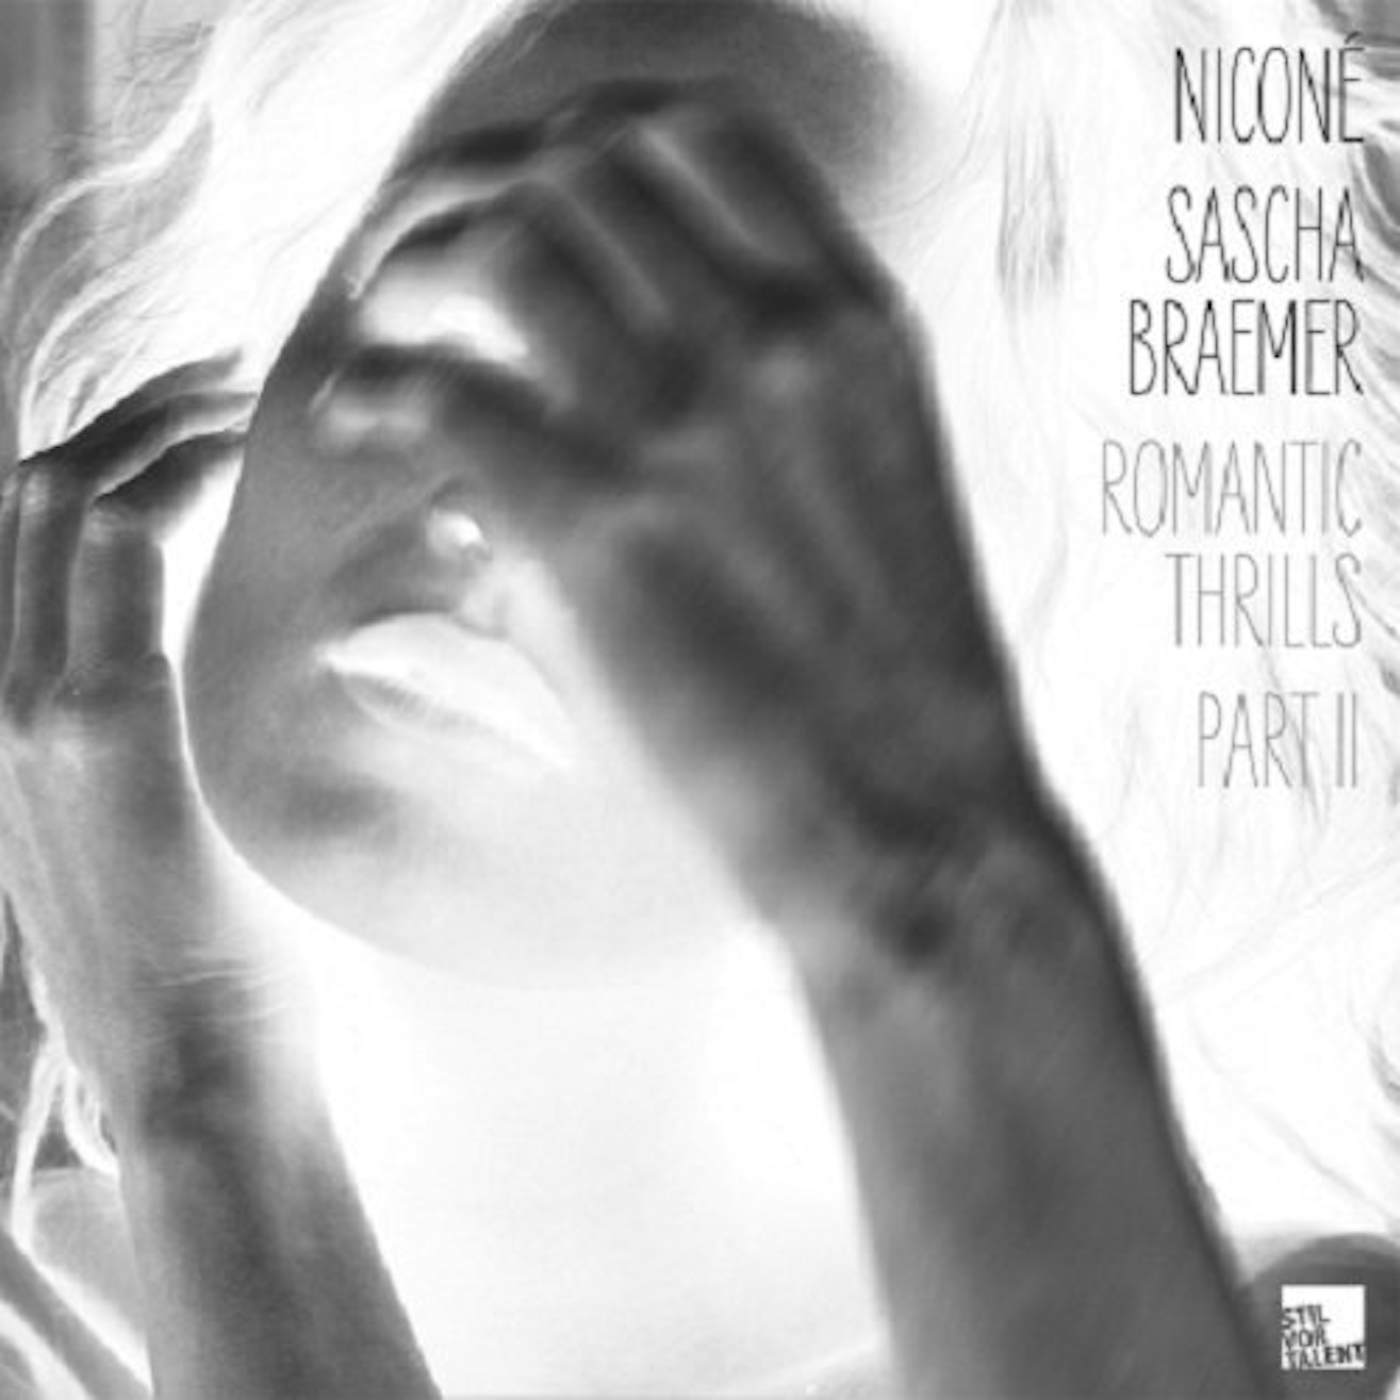 Sascha Nicone / Braemer ROMANTIC THRILLS PT 2 Vinyl Record